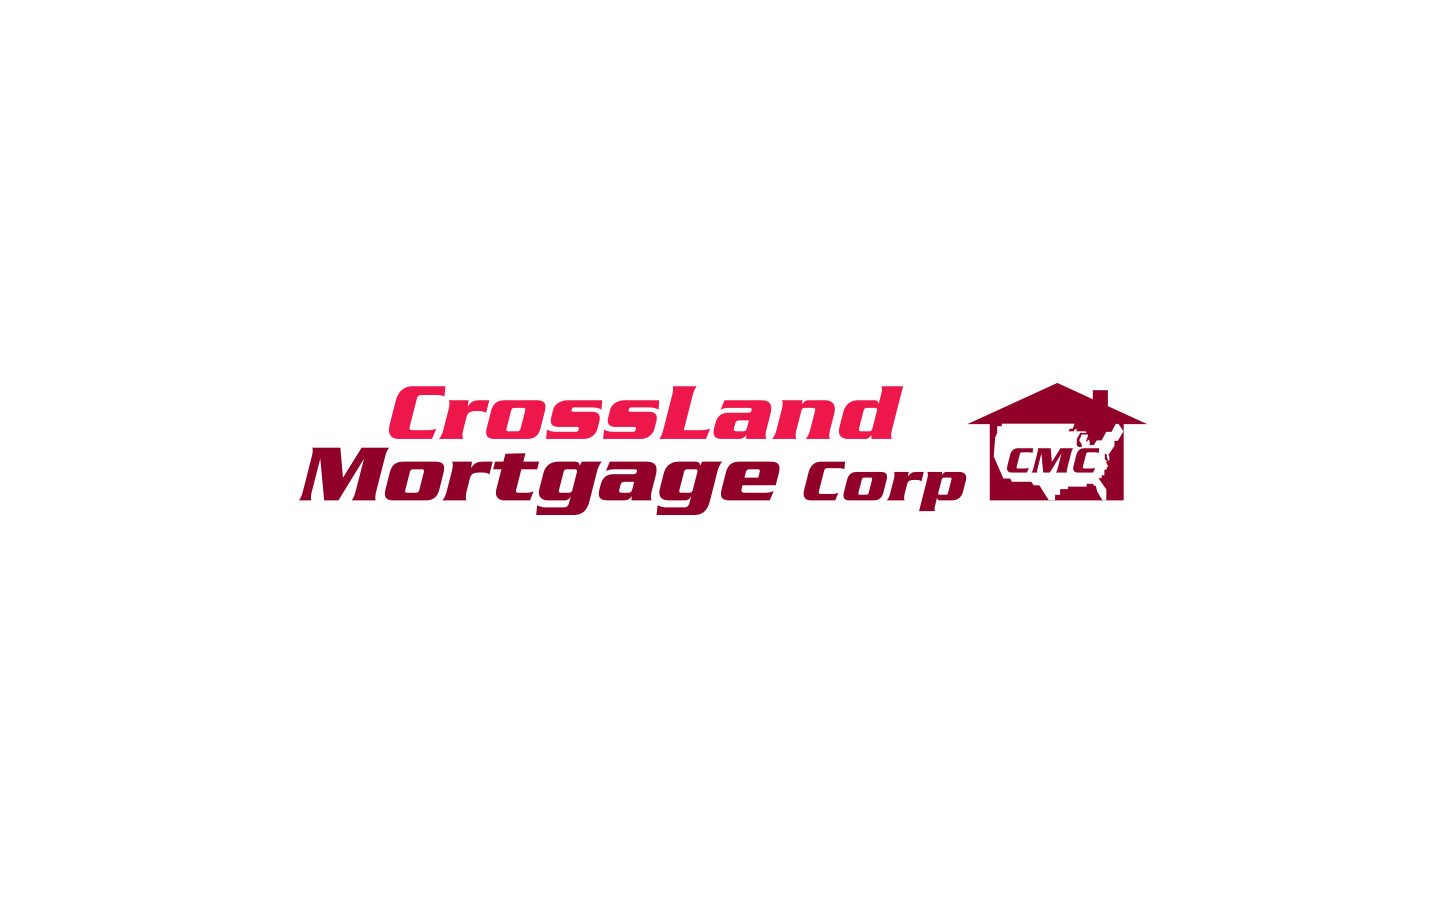 Crossland Mortgage Corp.